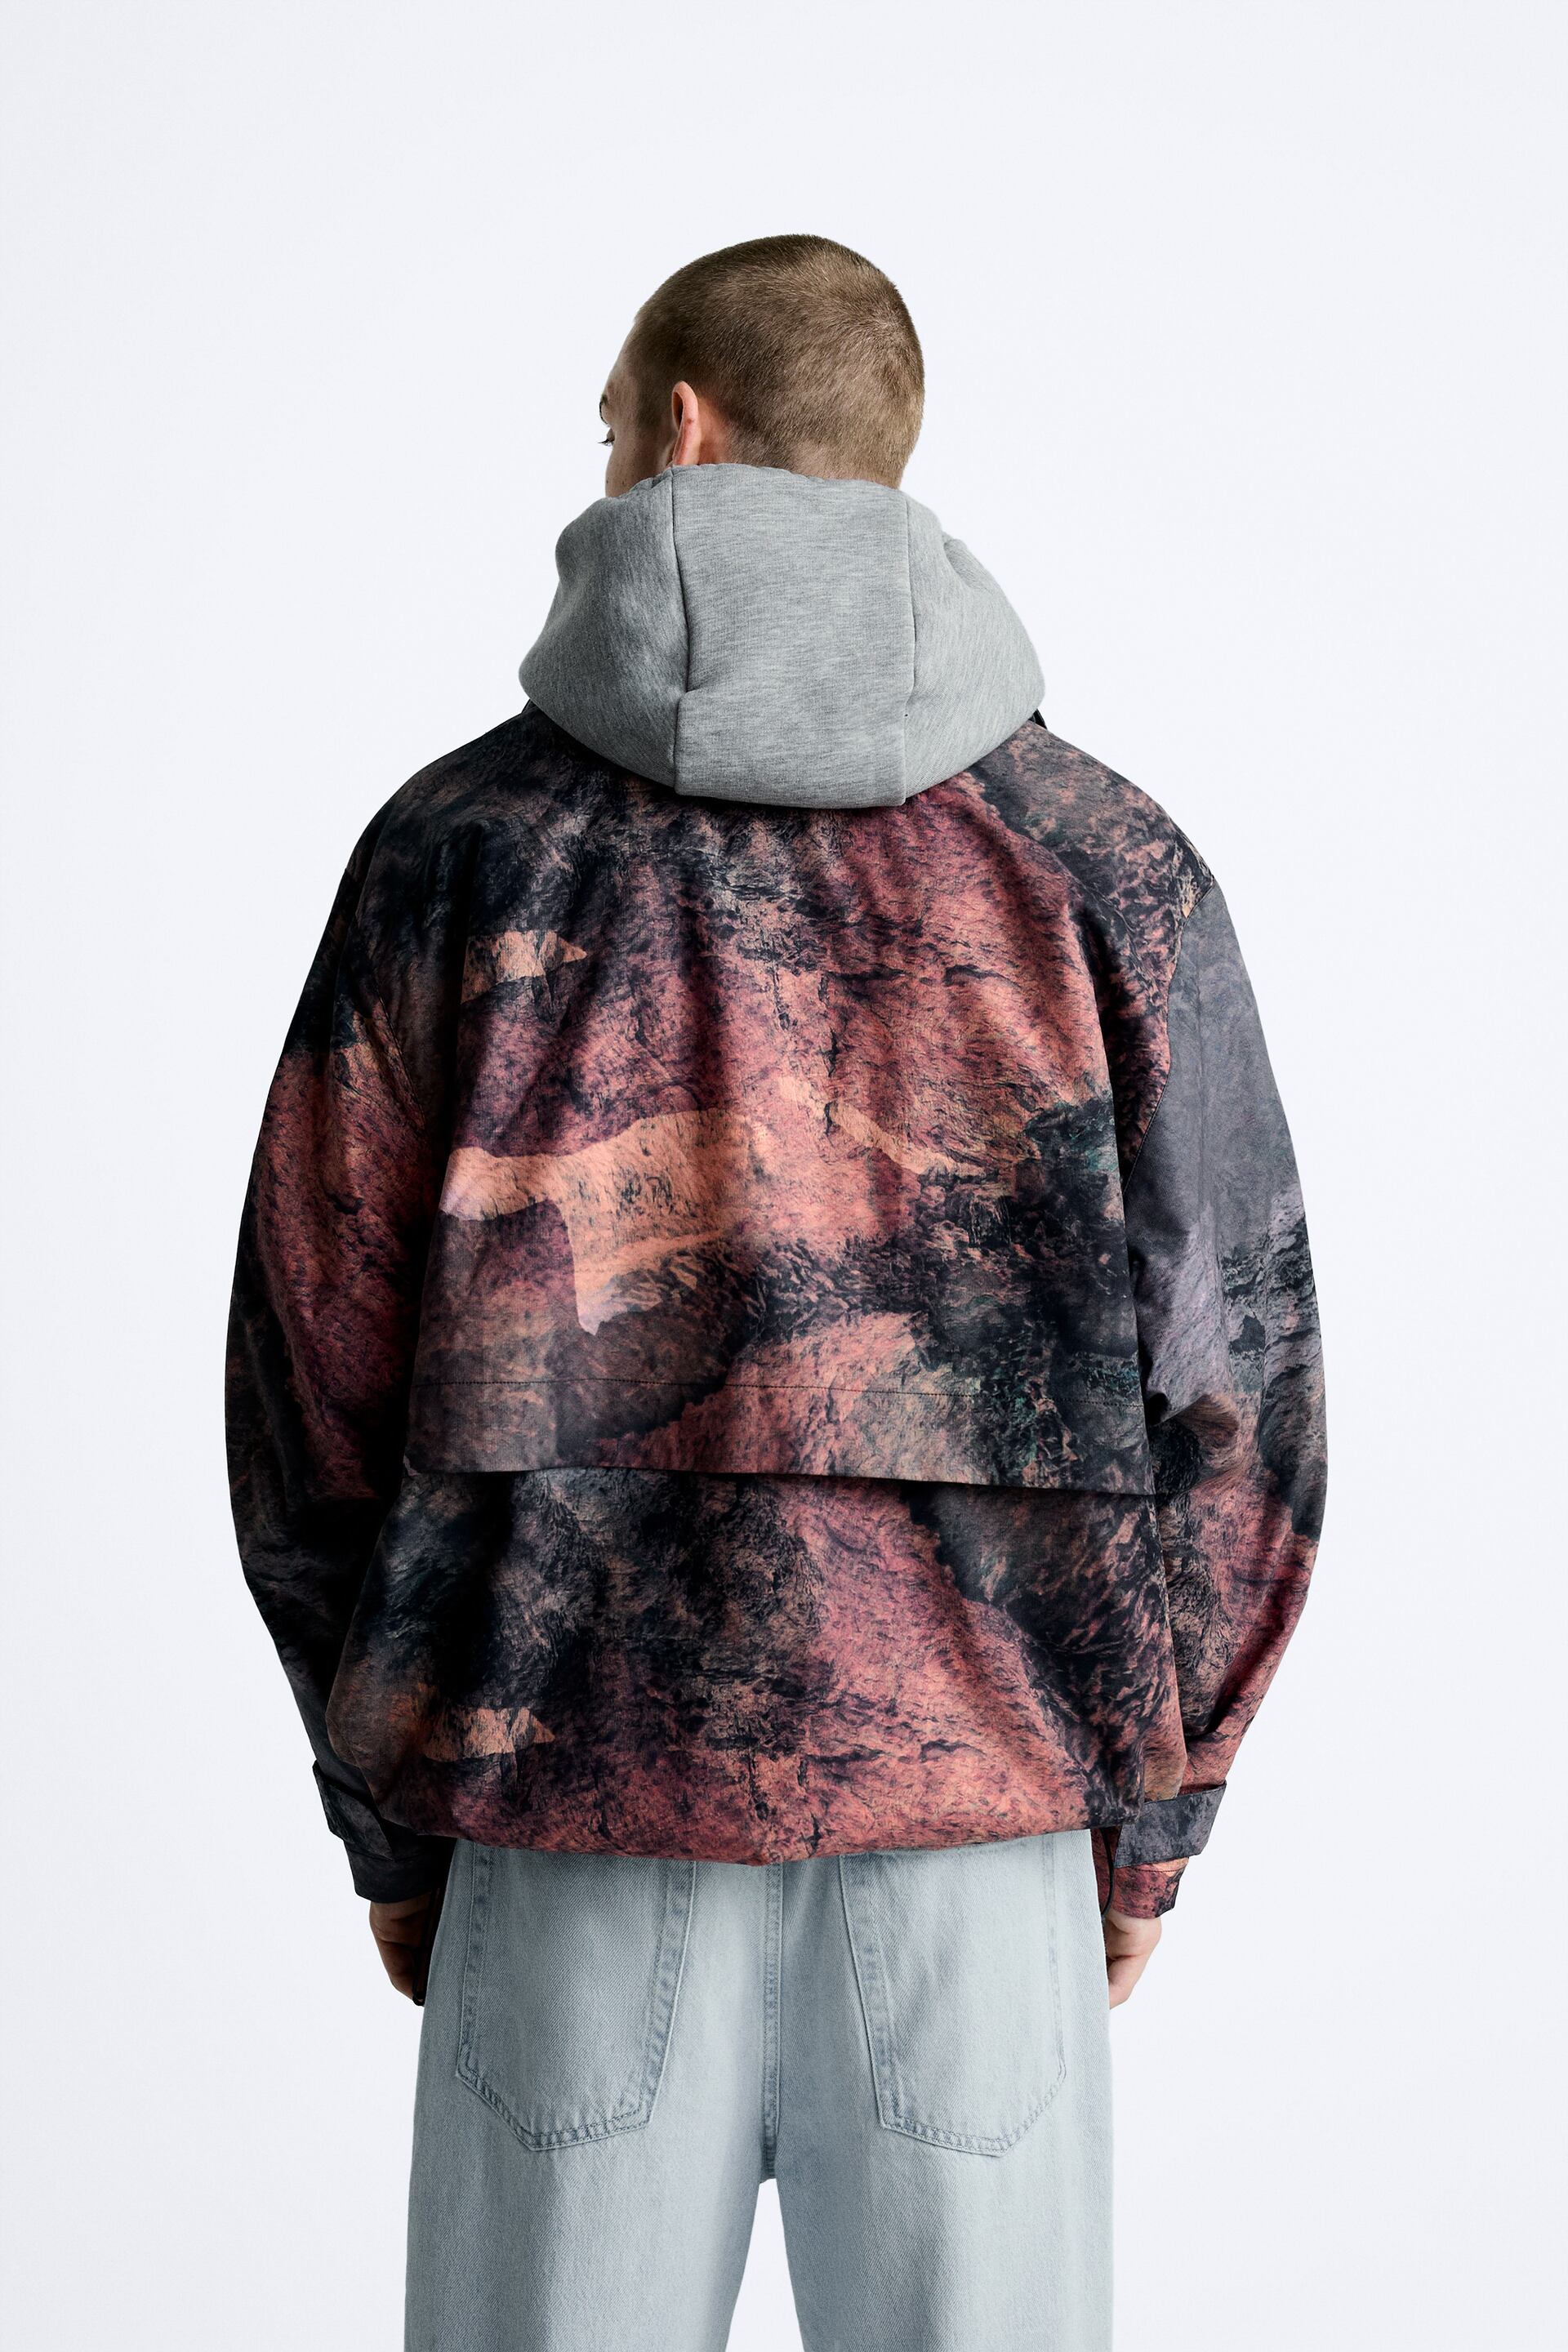 Zara Men's Abstract Print Technical Jacket